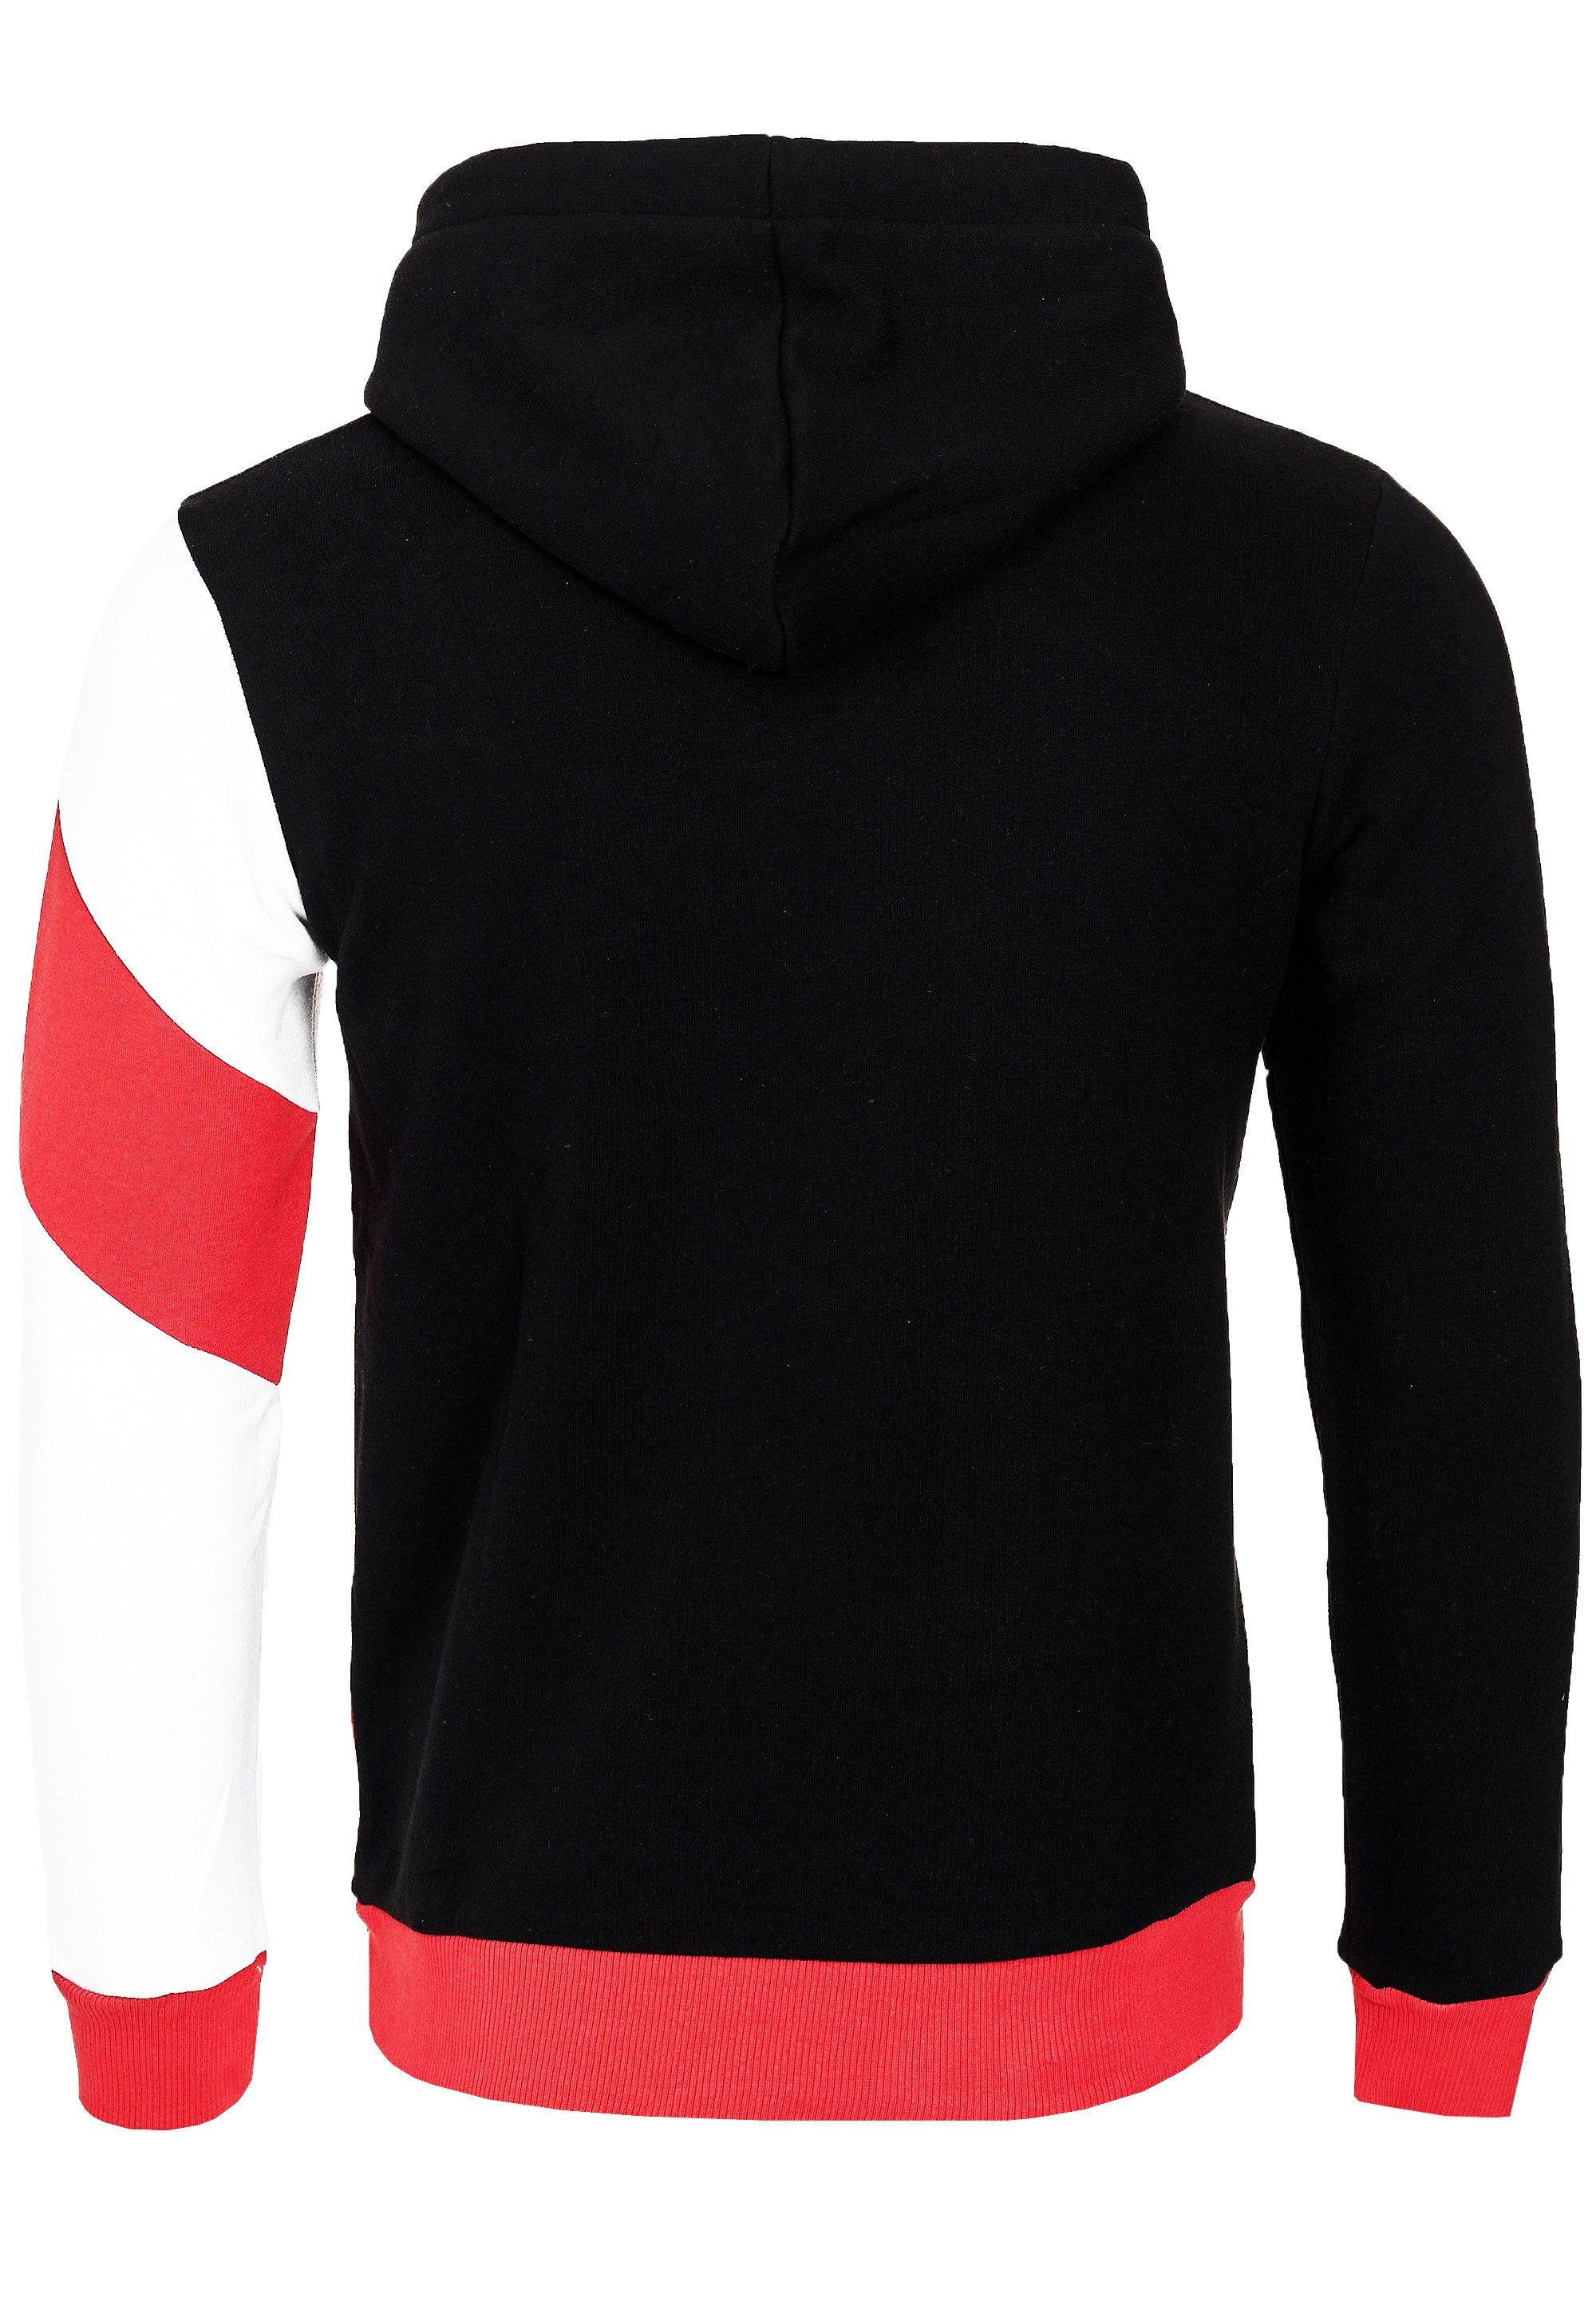 Rusty Neal Kapuzensweatshirt in sportlichem schwarz-rot Design